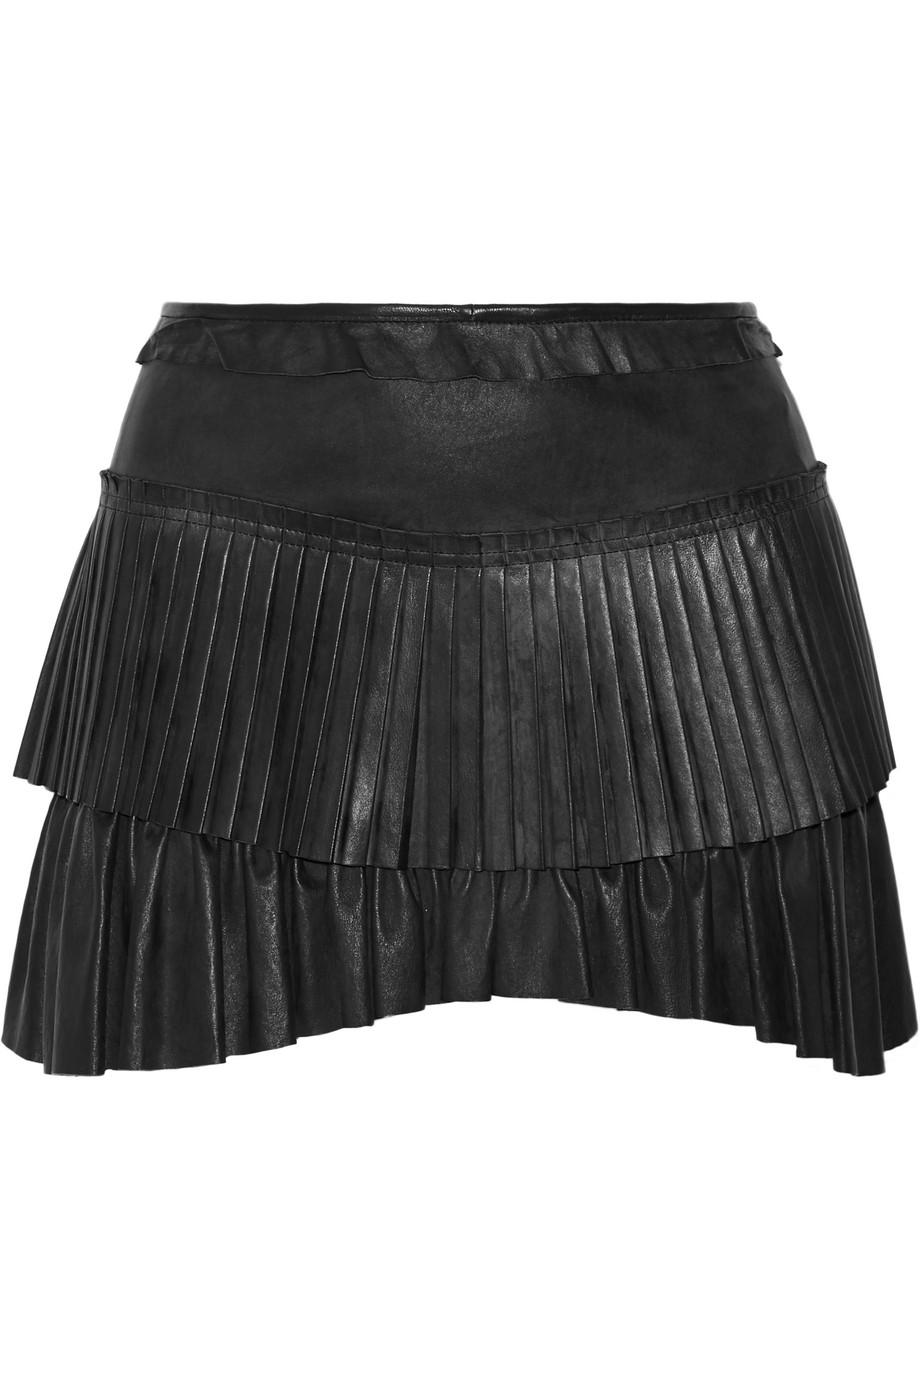 ISABEL MARANT Jalyne Pleated Leather Mini Skirt in Black | ModeSens